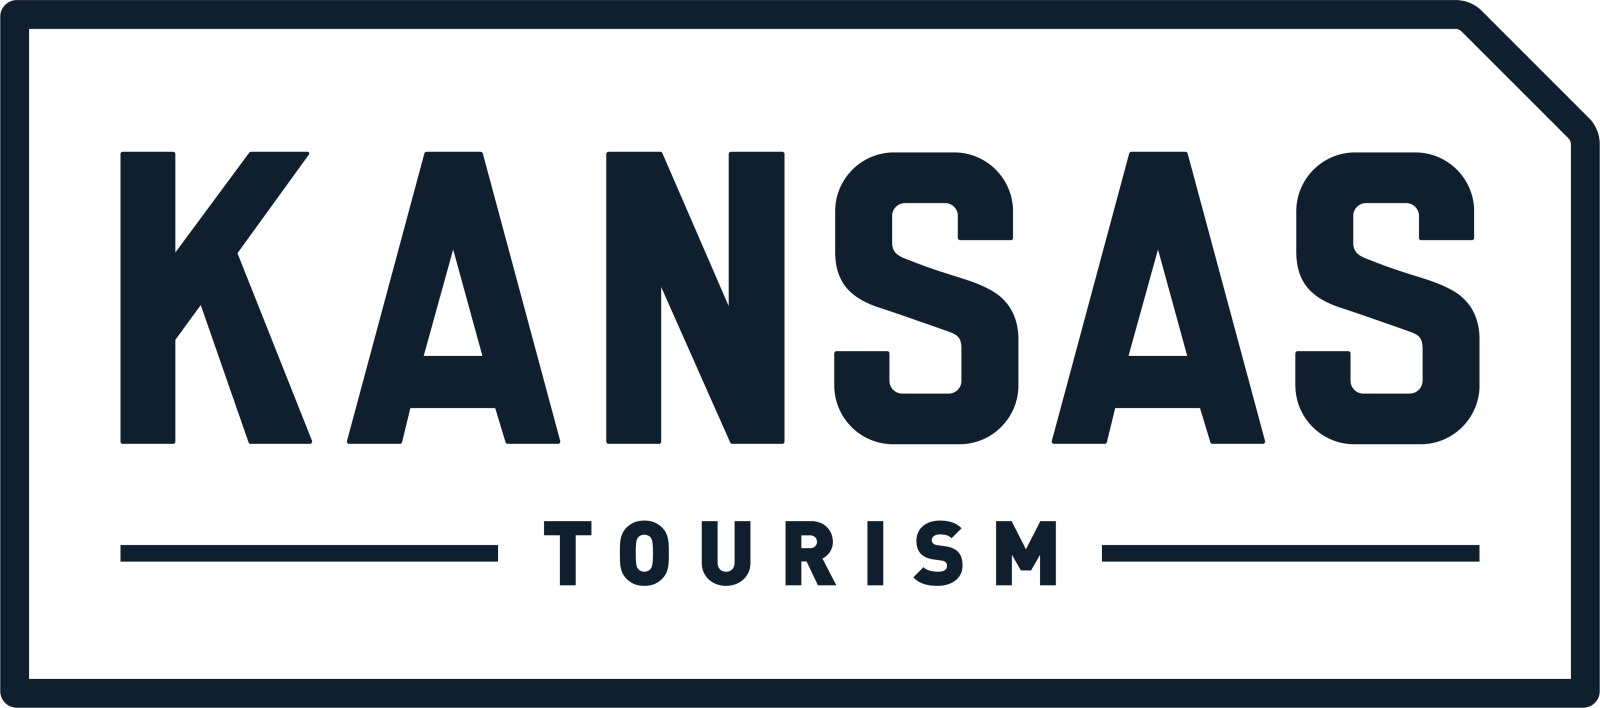 Ks Tourism Logo Lockup Dark Blue.png